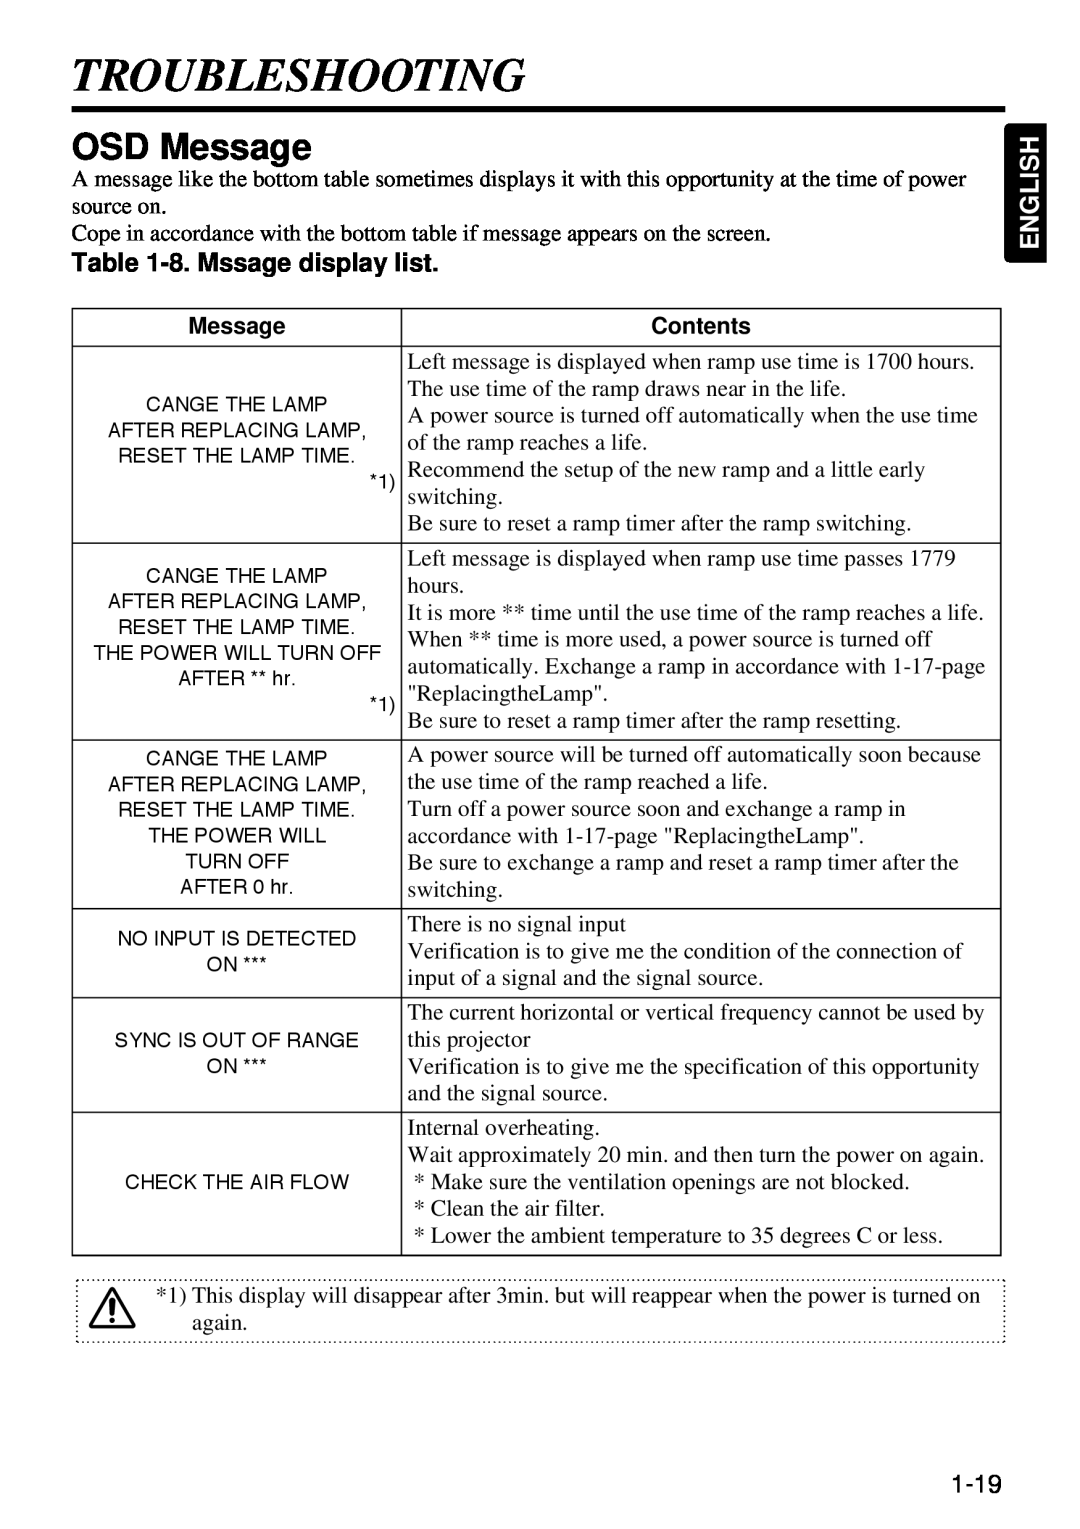 Polaroid SVGA 270 manual Troubleshooting, OSD Message, 8. Mssage display list, English 